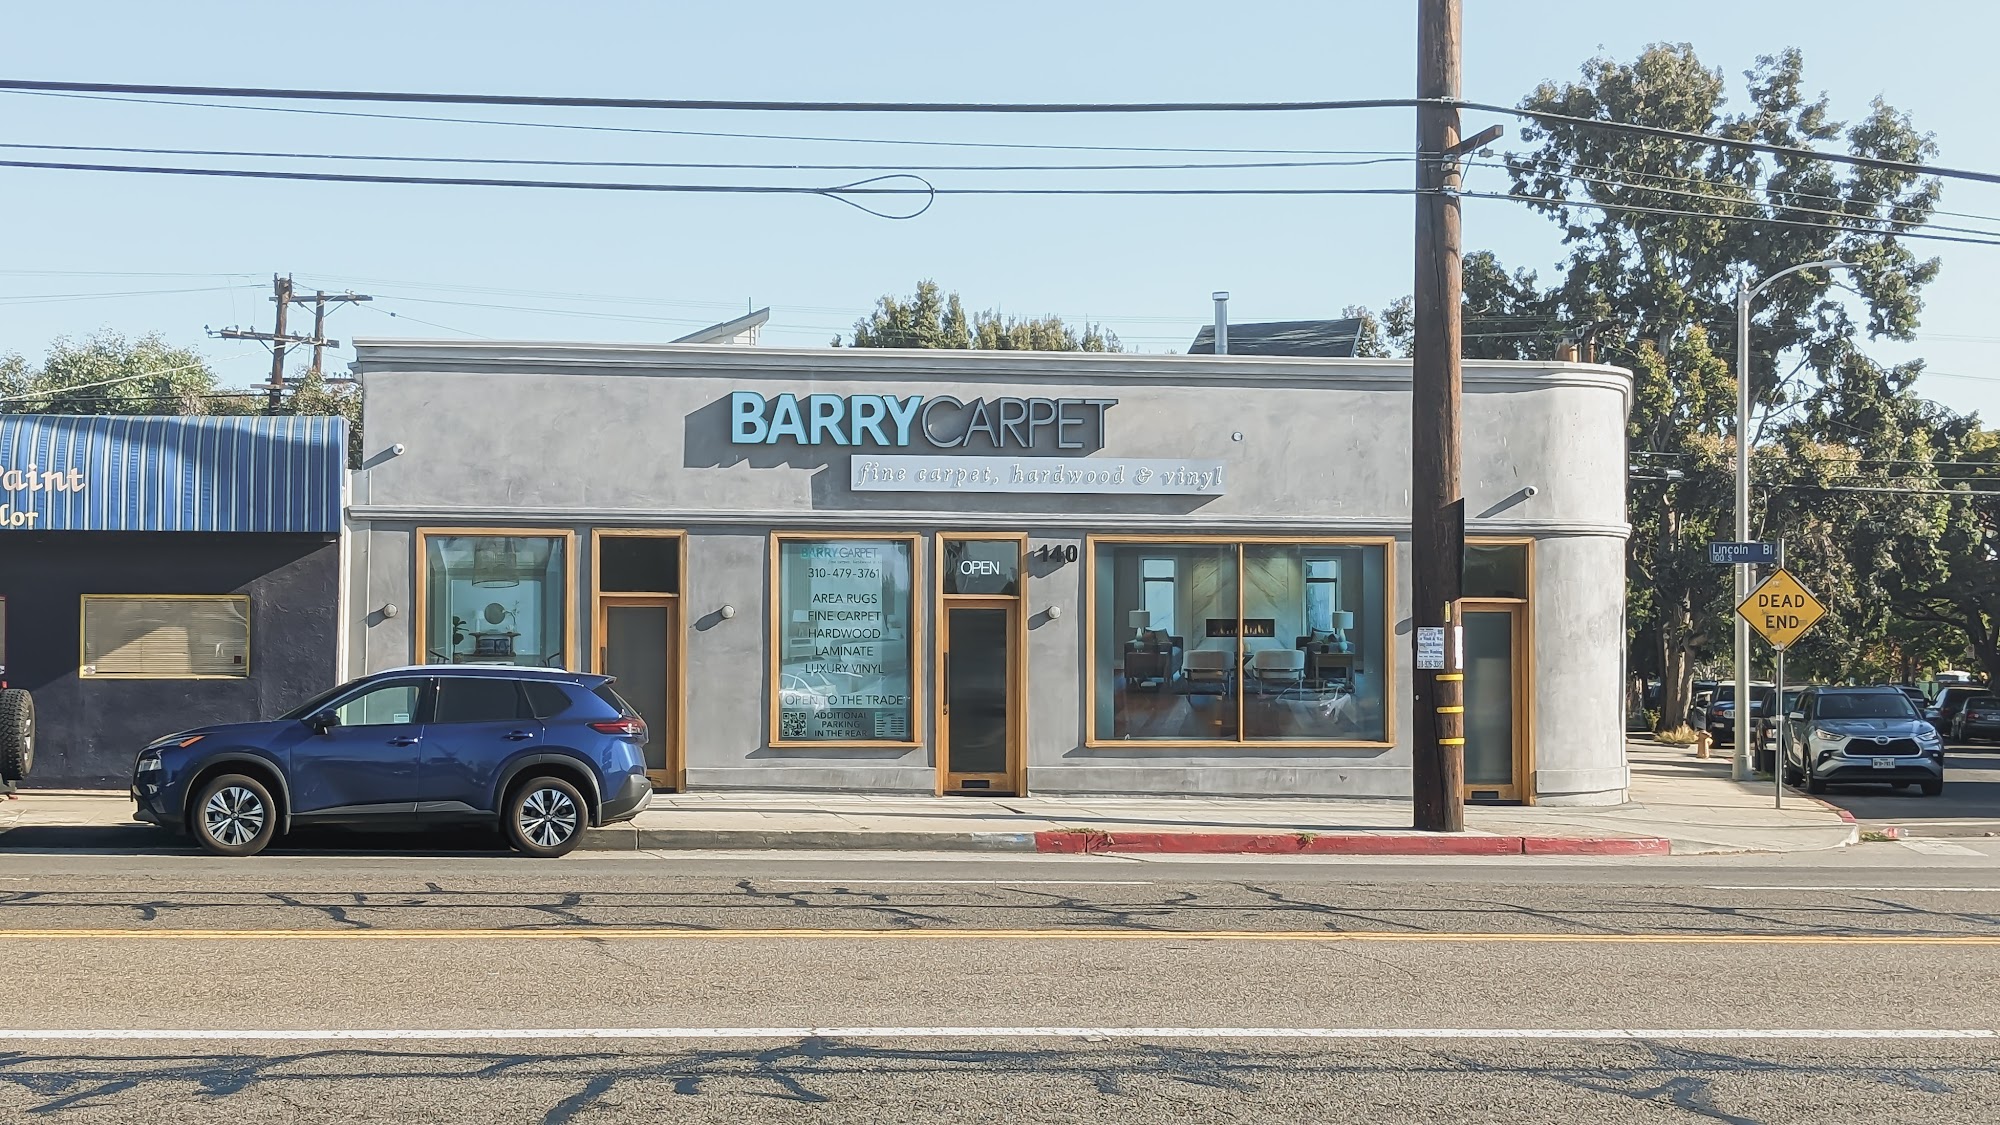 Barry Carpet